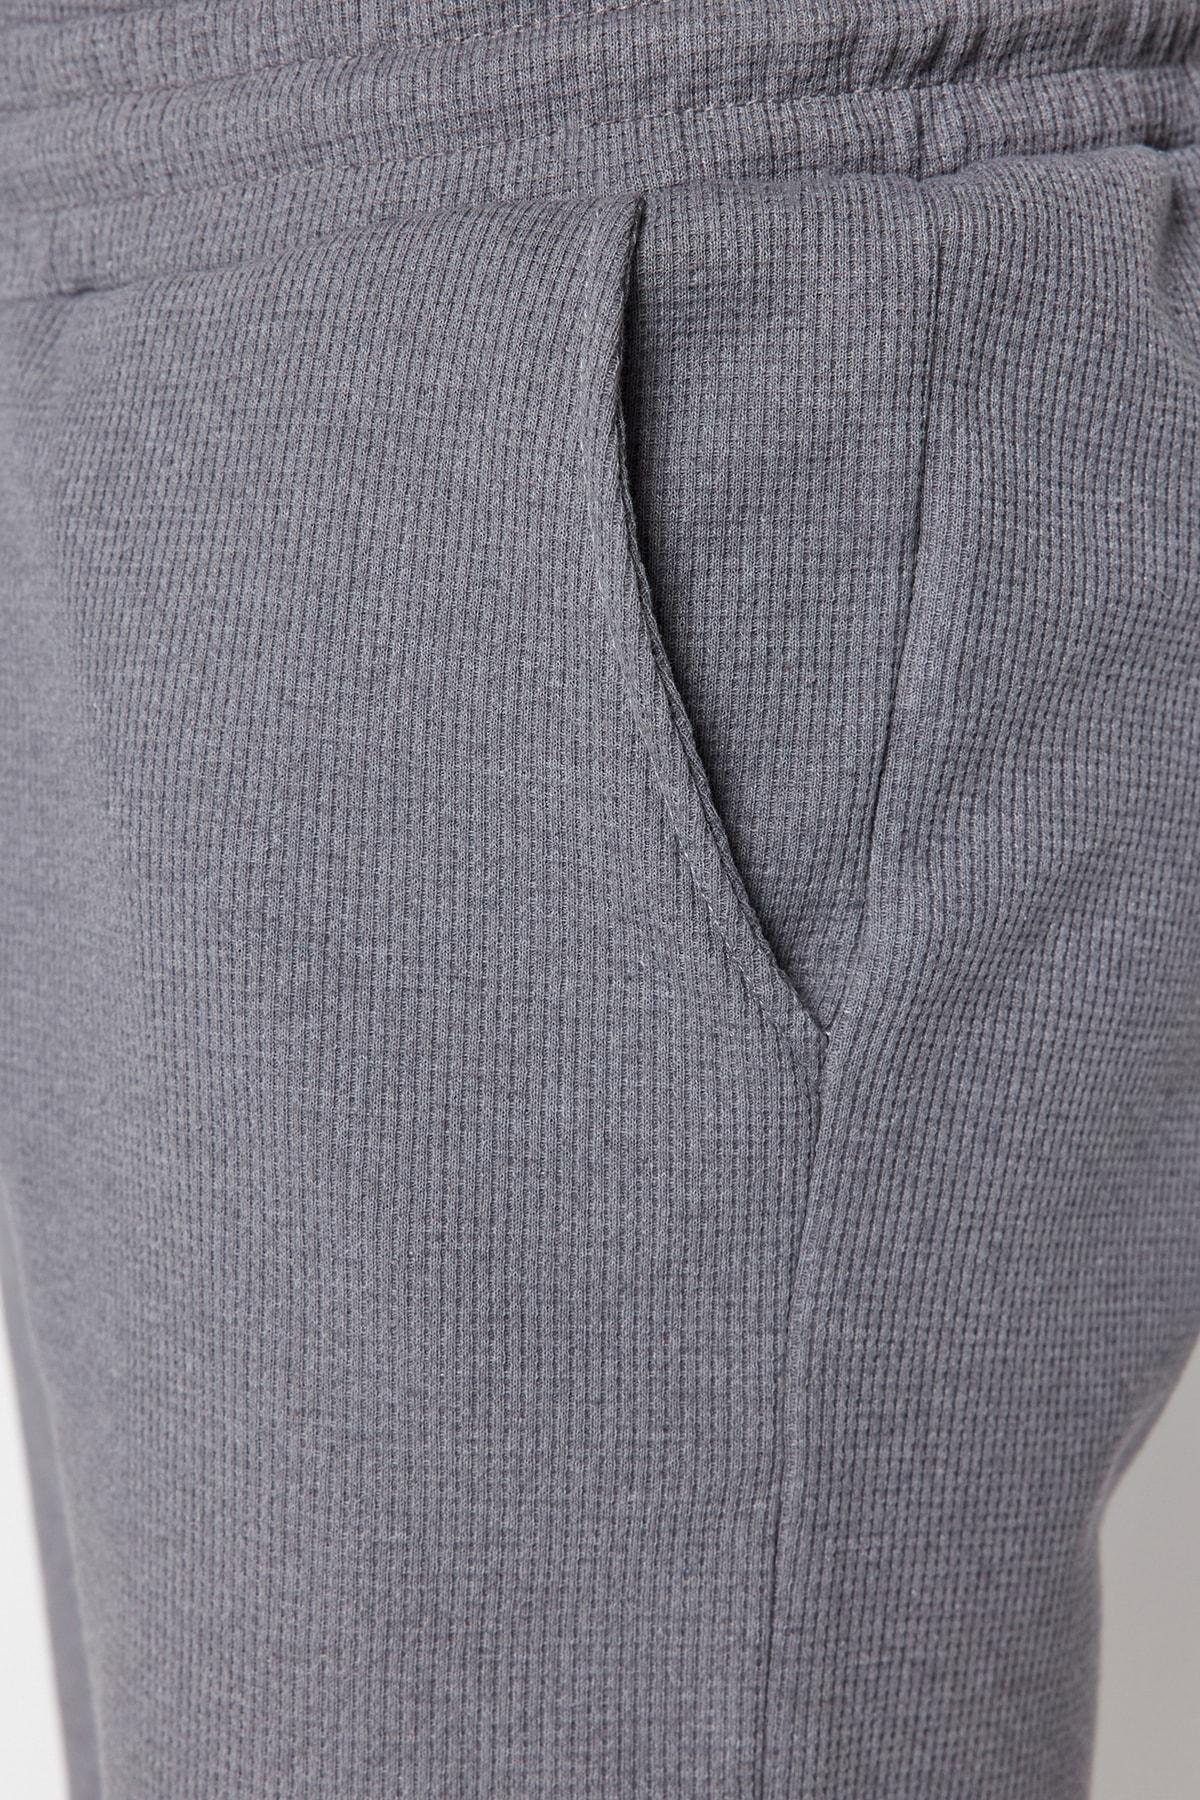 Trendyol - Grey Embroidered Knitted Pyjamas Set